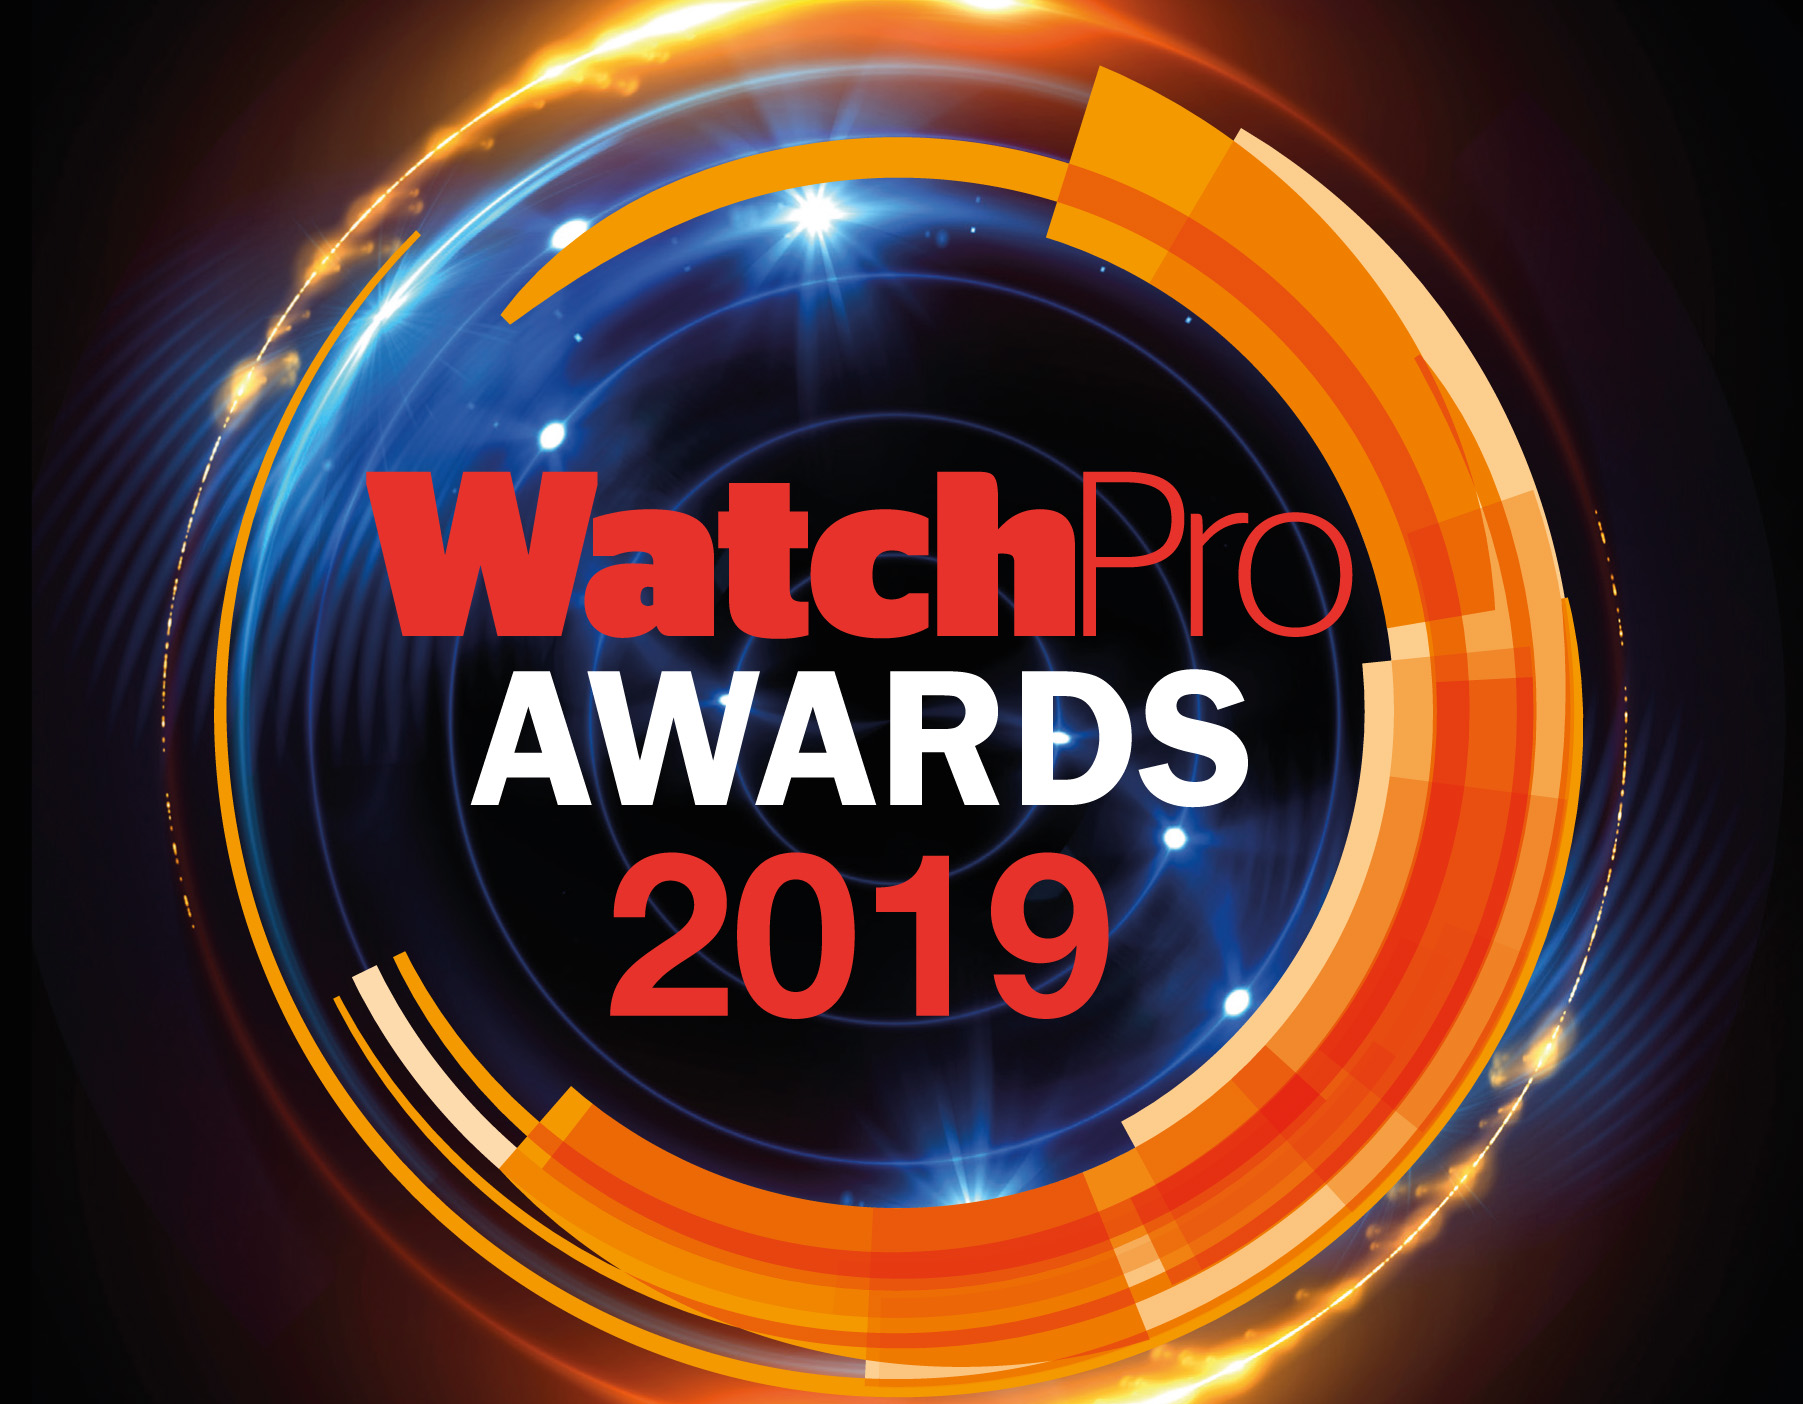 Watchpro awards 2019